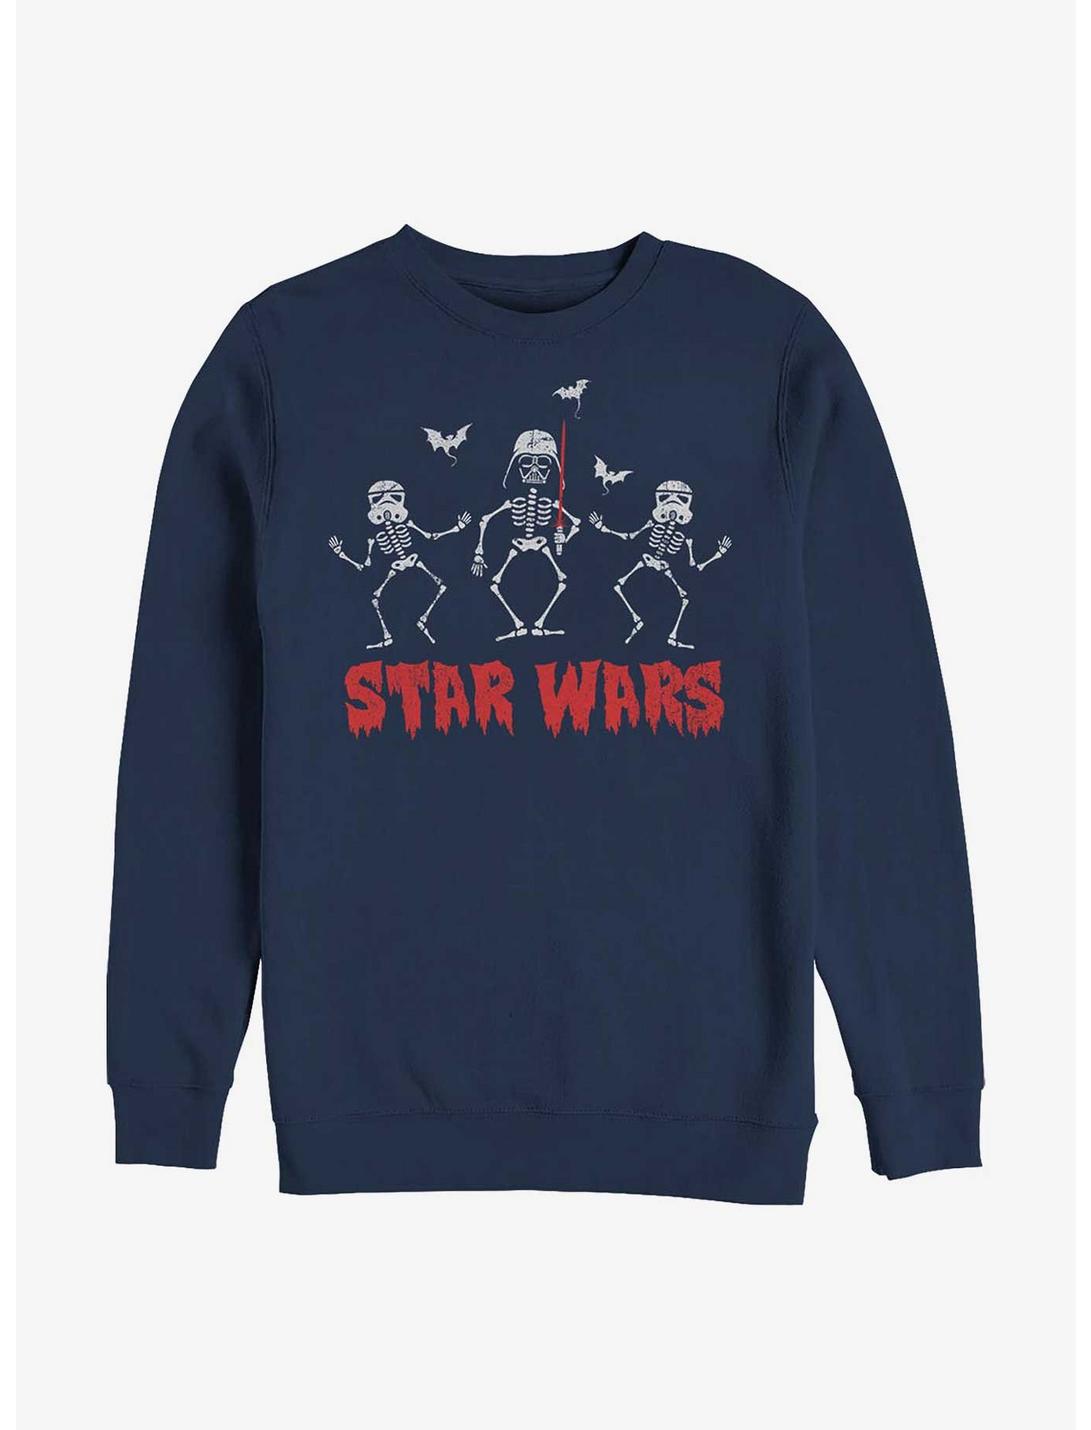 Star Wars Spooky Wars Sweatshirt, NAVY, hi-res